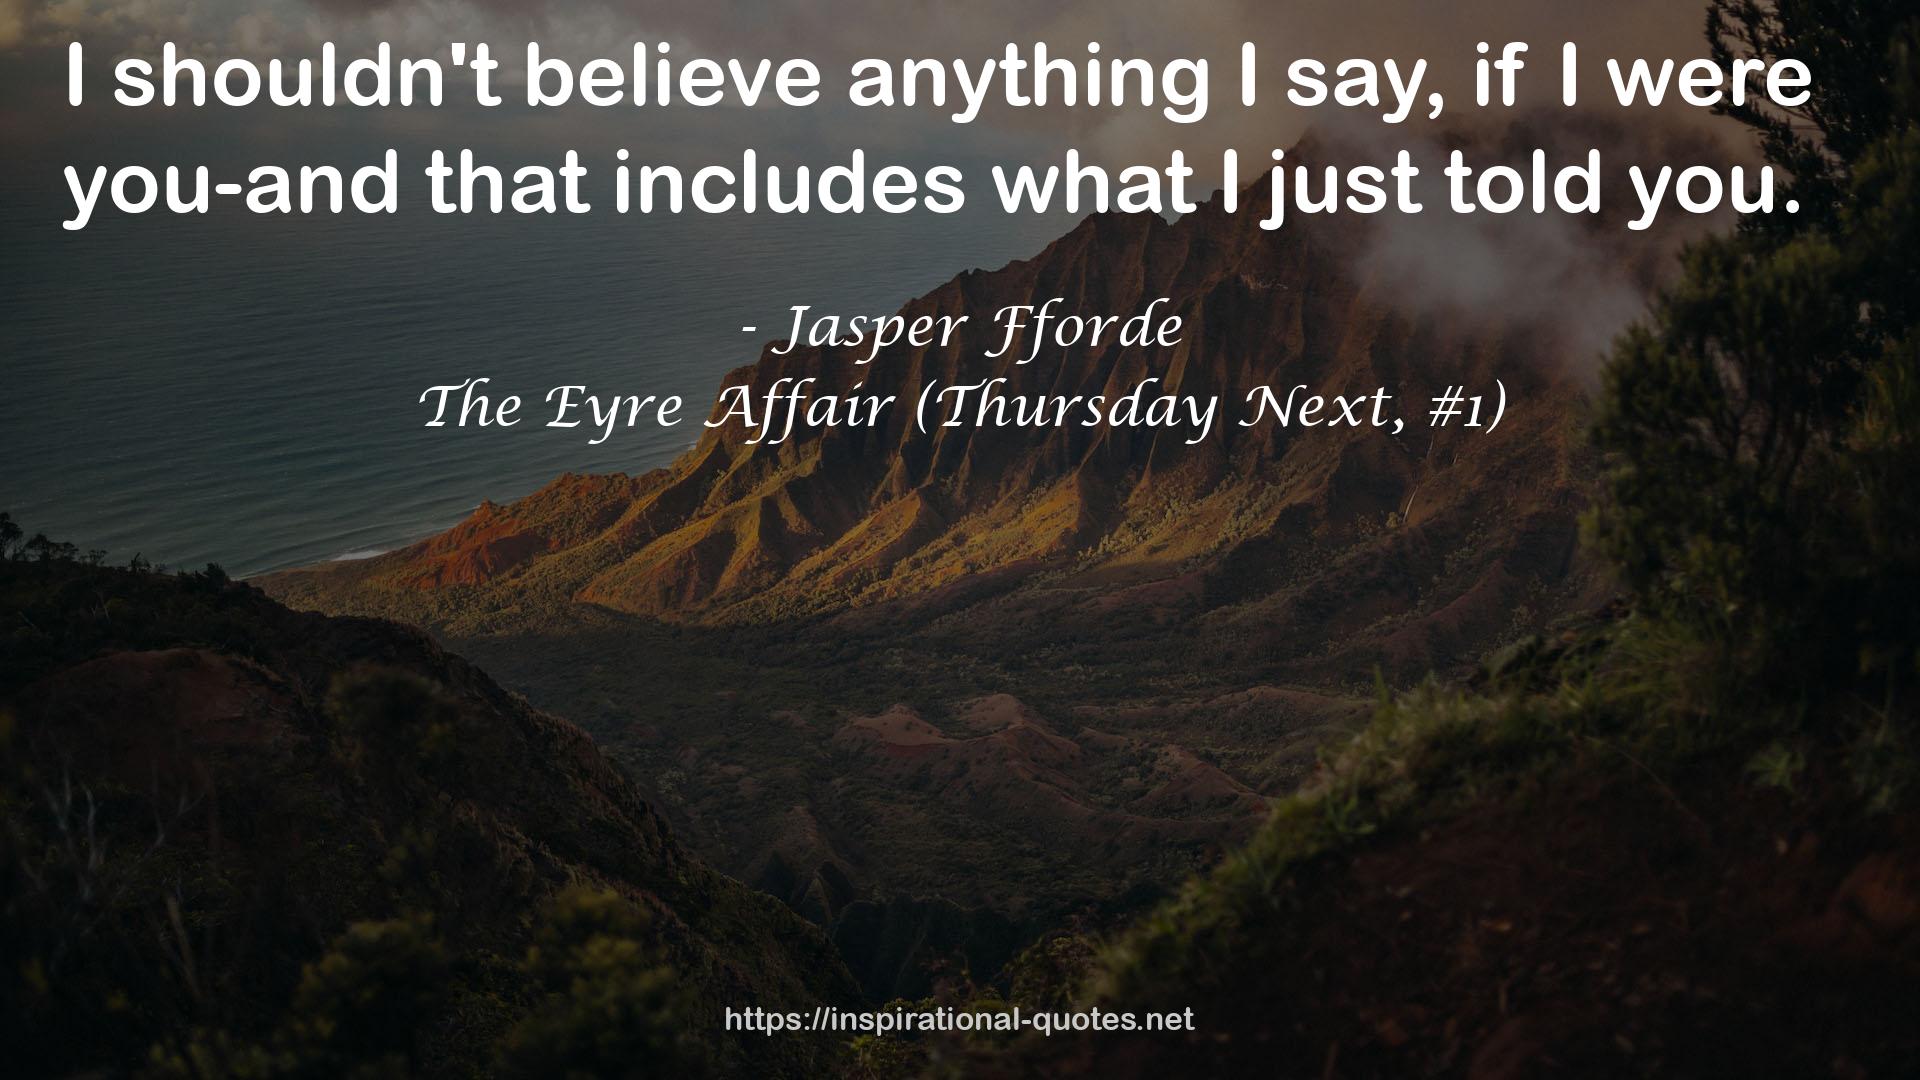 The Eyre Affair (Thursday Next, #1) QUOTES